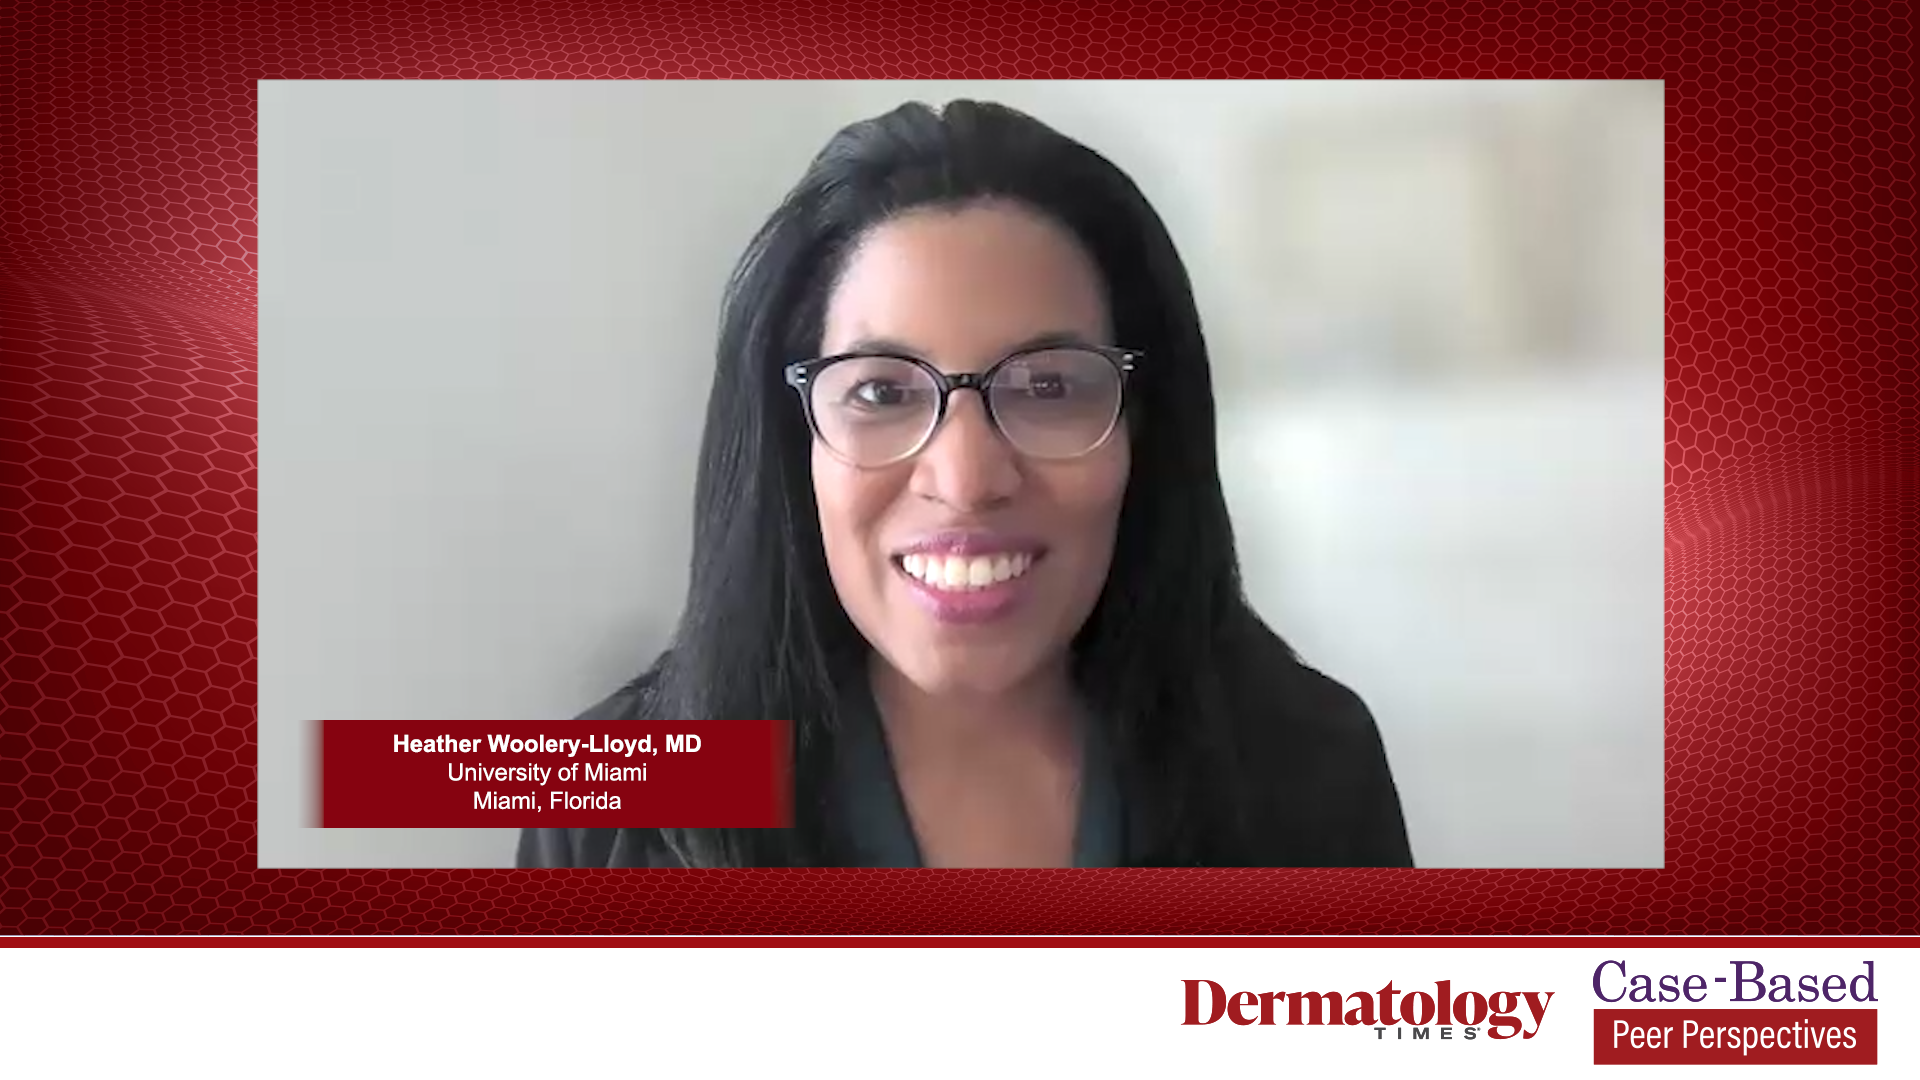 Heather Woolery-Lloyd, MD, FAAD, an expert on acne